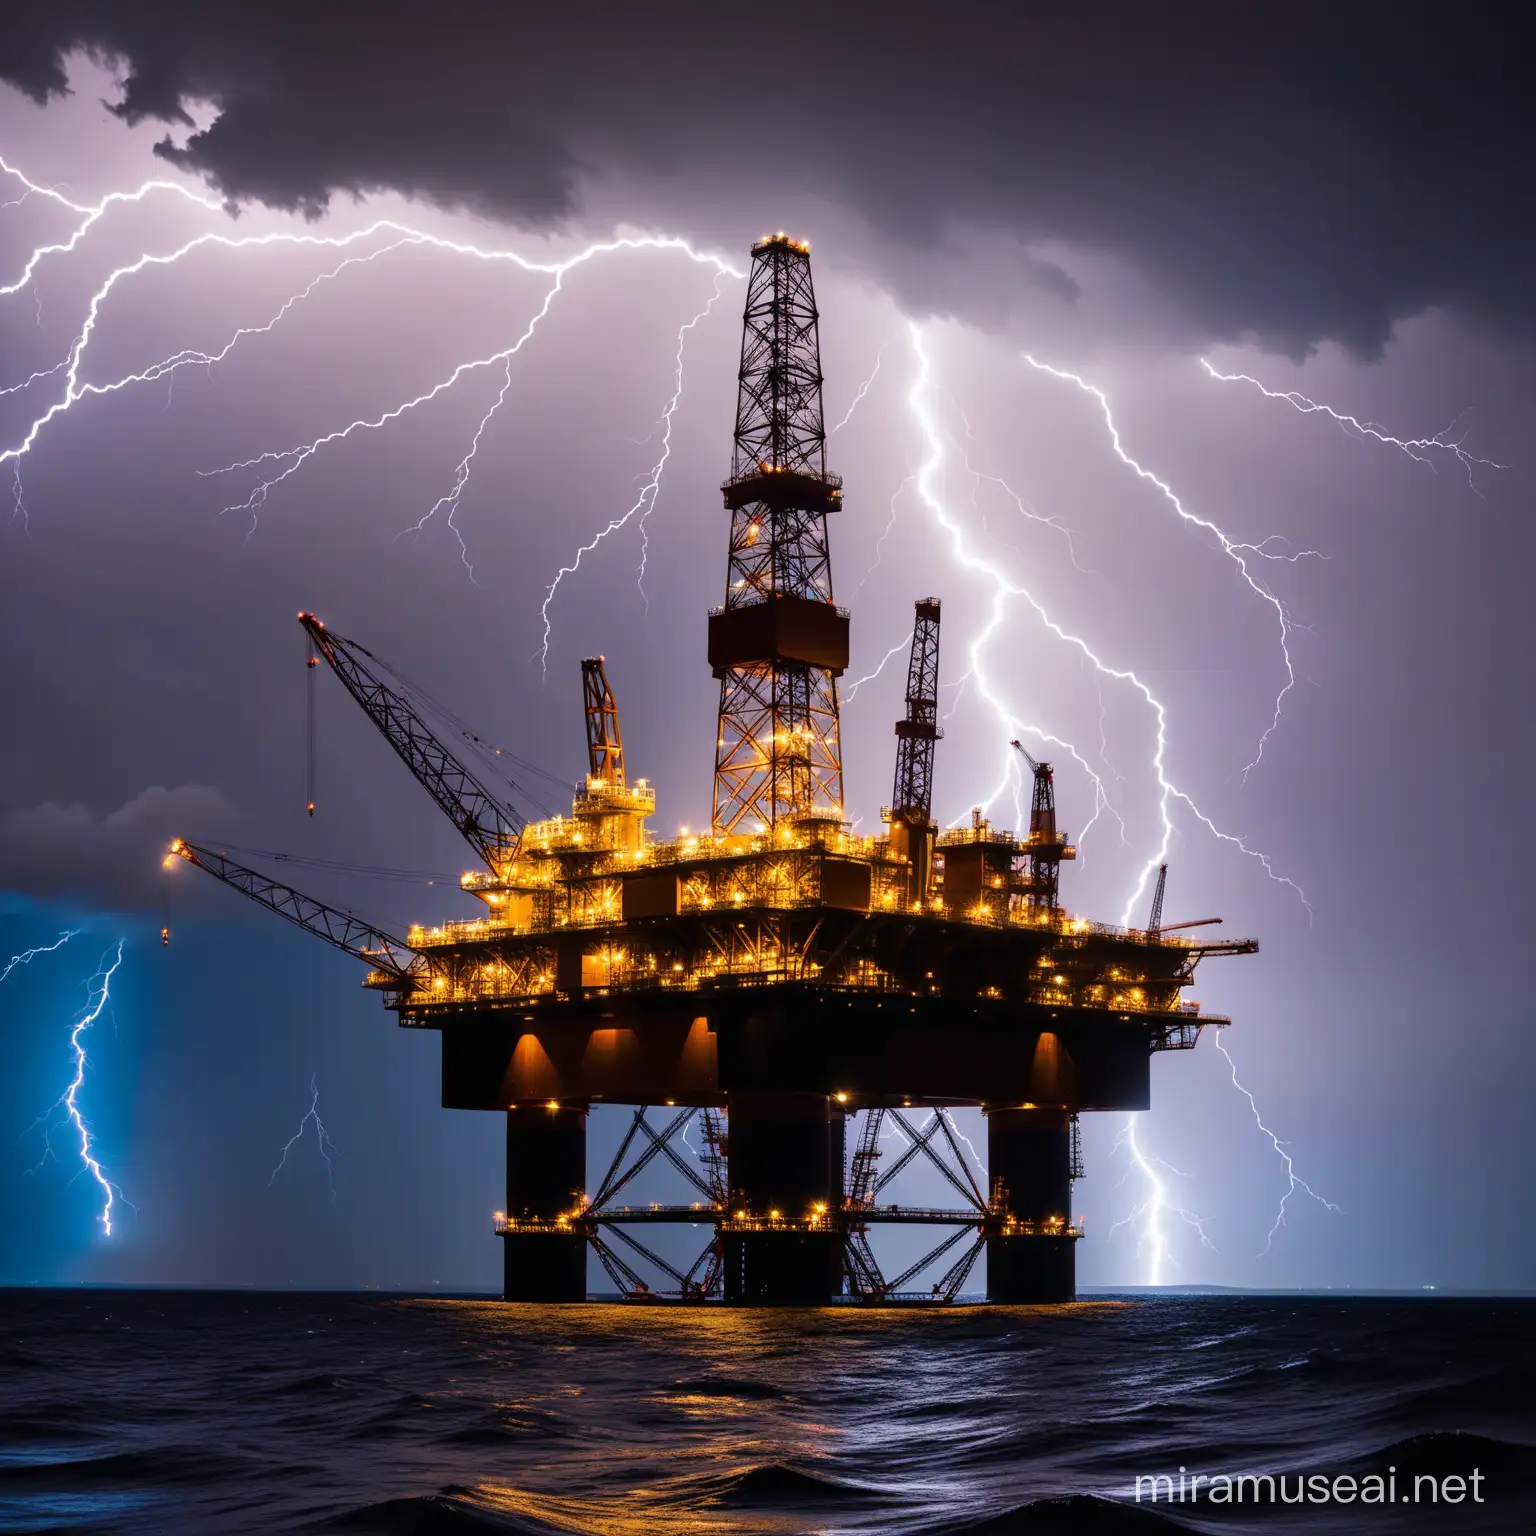 Majestic Oil Rig Illuminated by Electrifying Lightning Storm